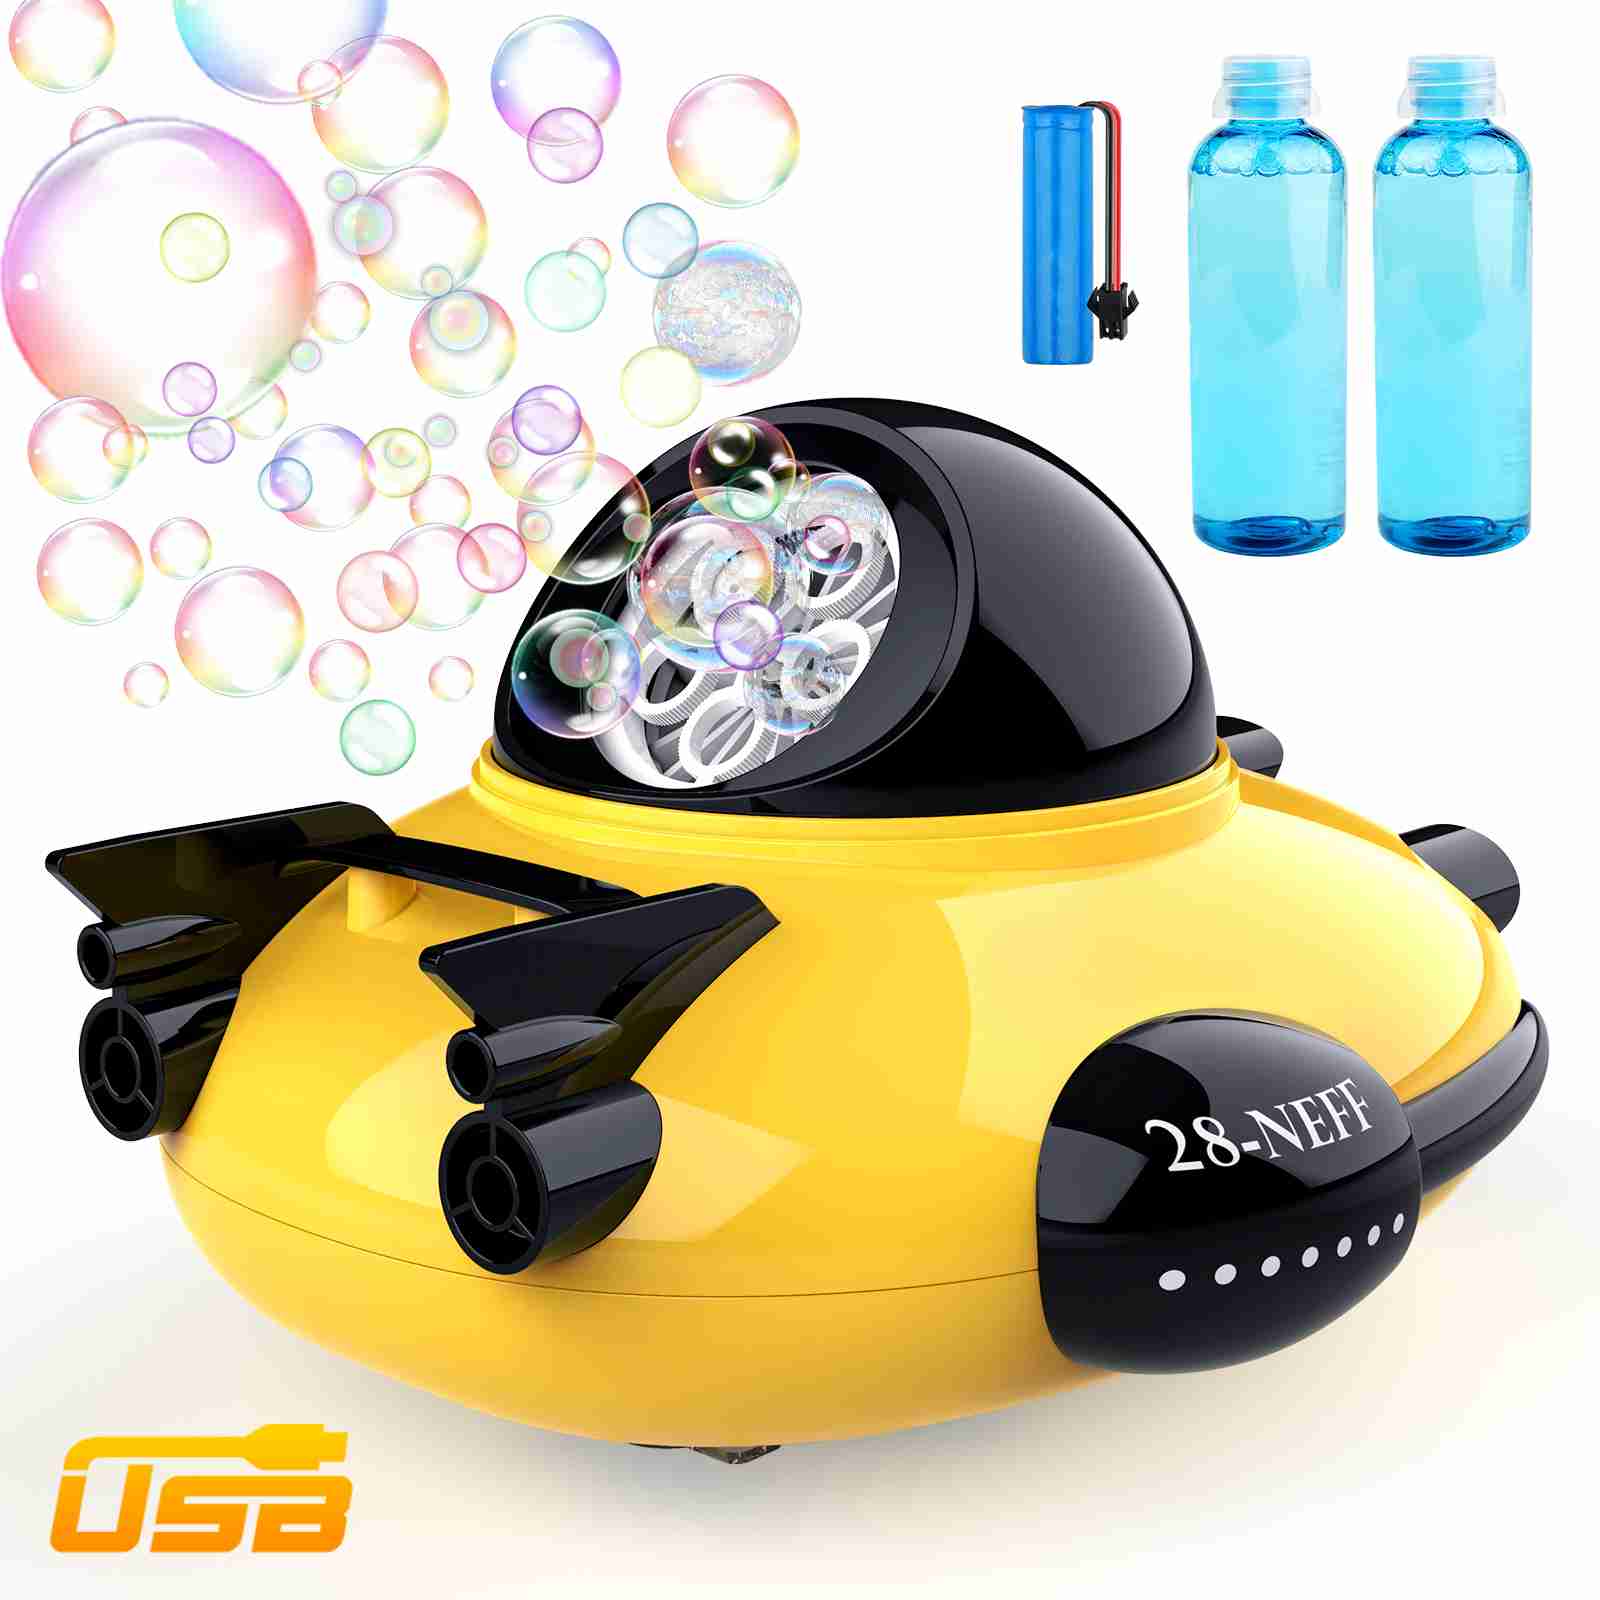 Betheaces Bubble Machine - Rechargeable Spaceship Theme Bubble Maker 2000+ Bubbles Per Minute, Bubble Machine Toys for Kids Boys Girls Toddlers, Automatic Bubble Blower with Bubble Solution (Yellow)